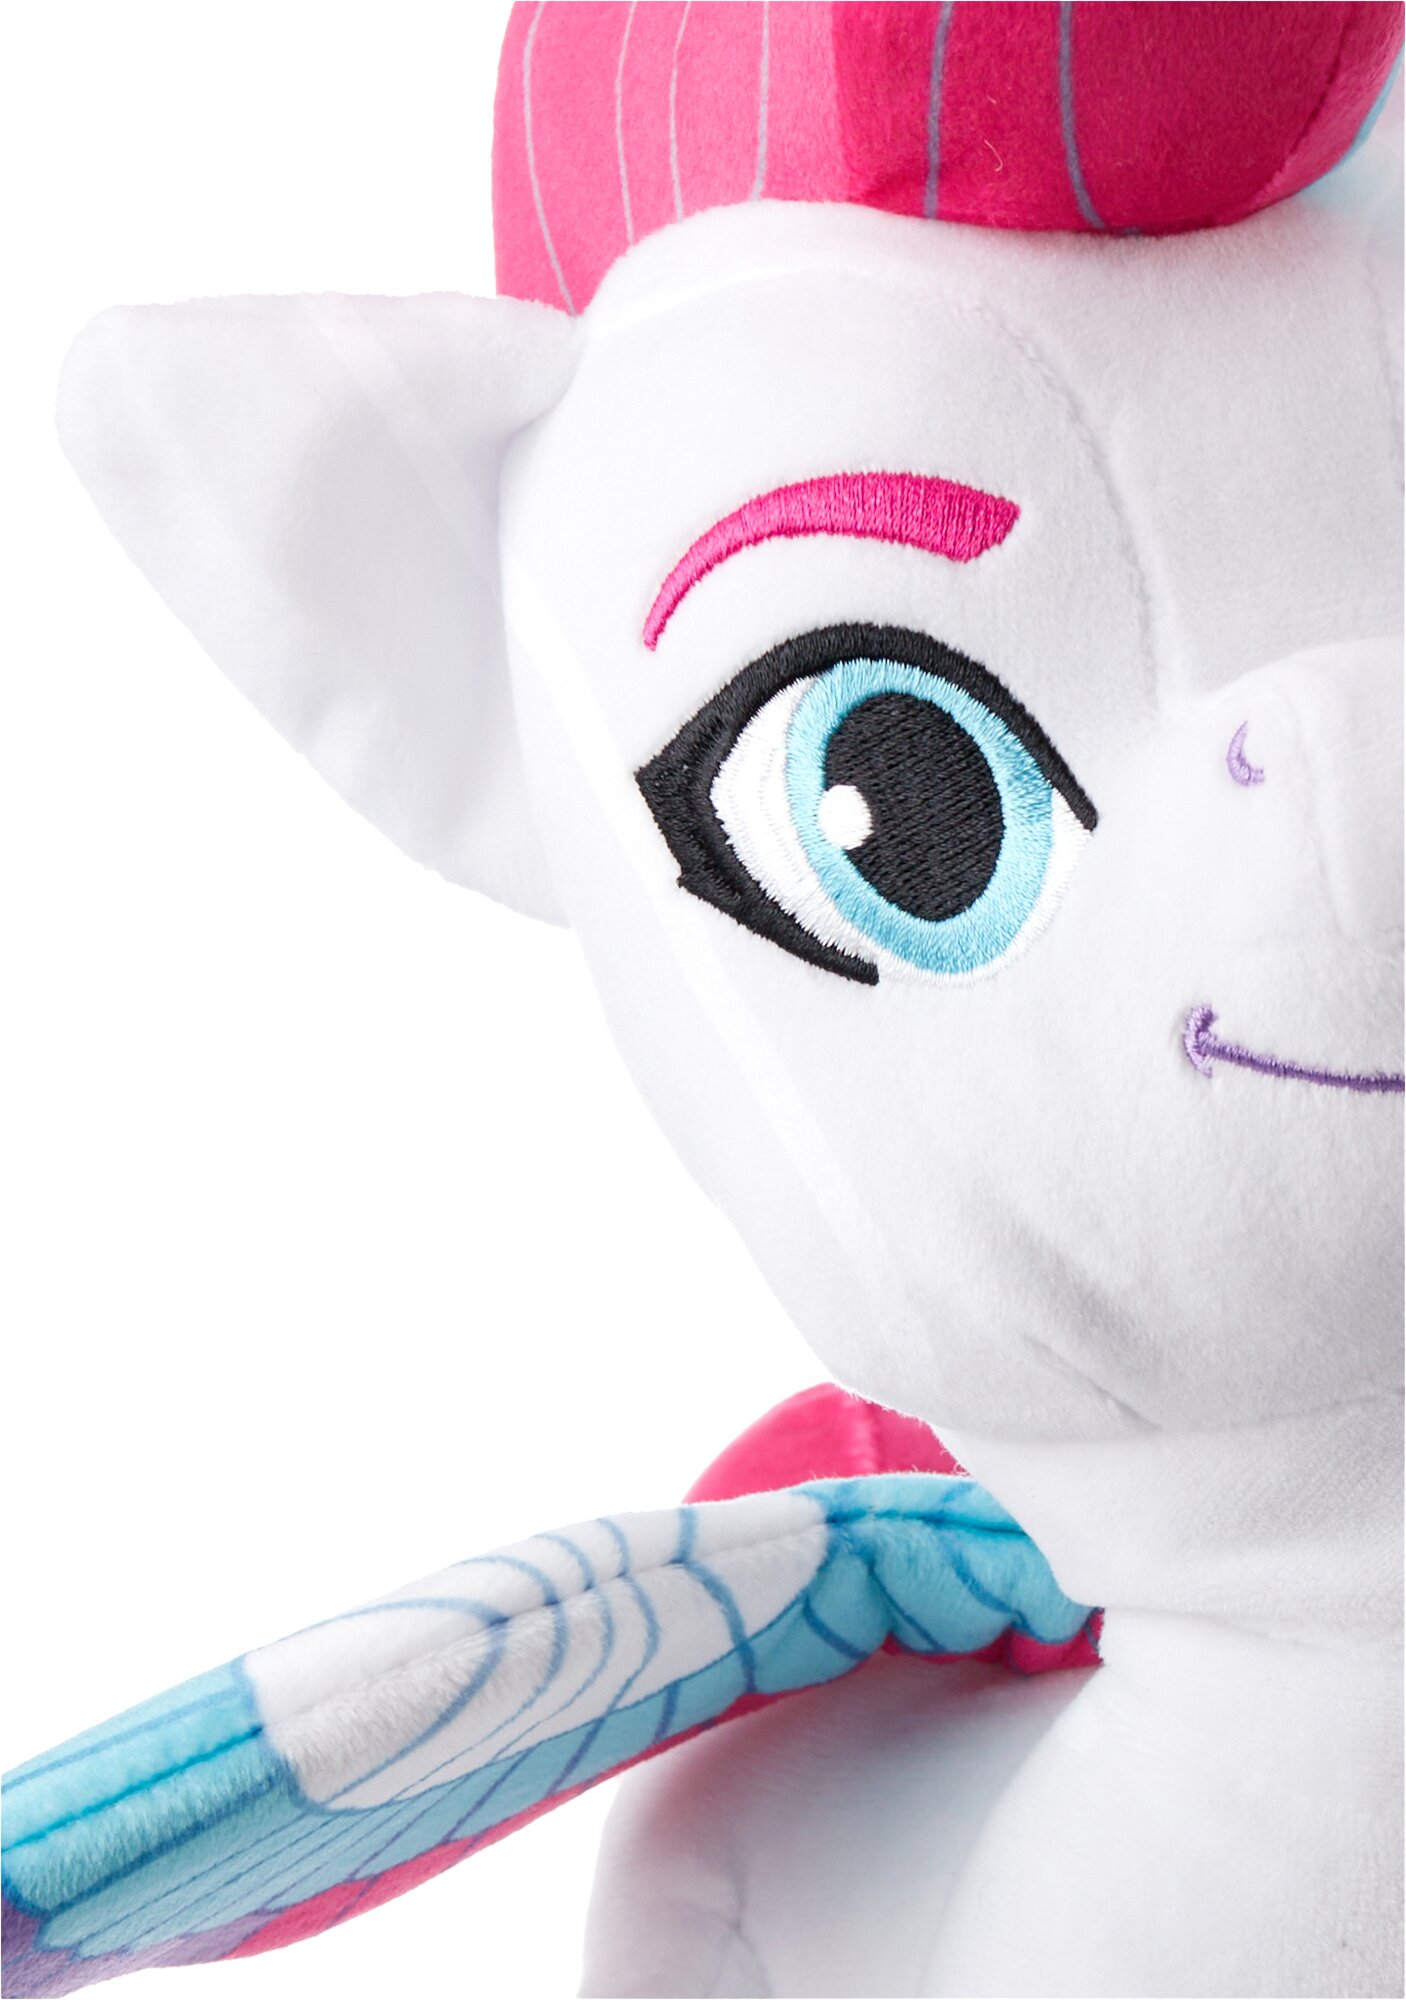 Мягкая игрушка YuMe Пони Зип My Little Pony, 25 см, белый/розовый